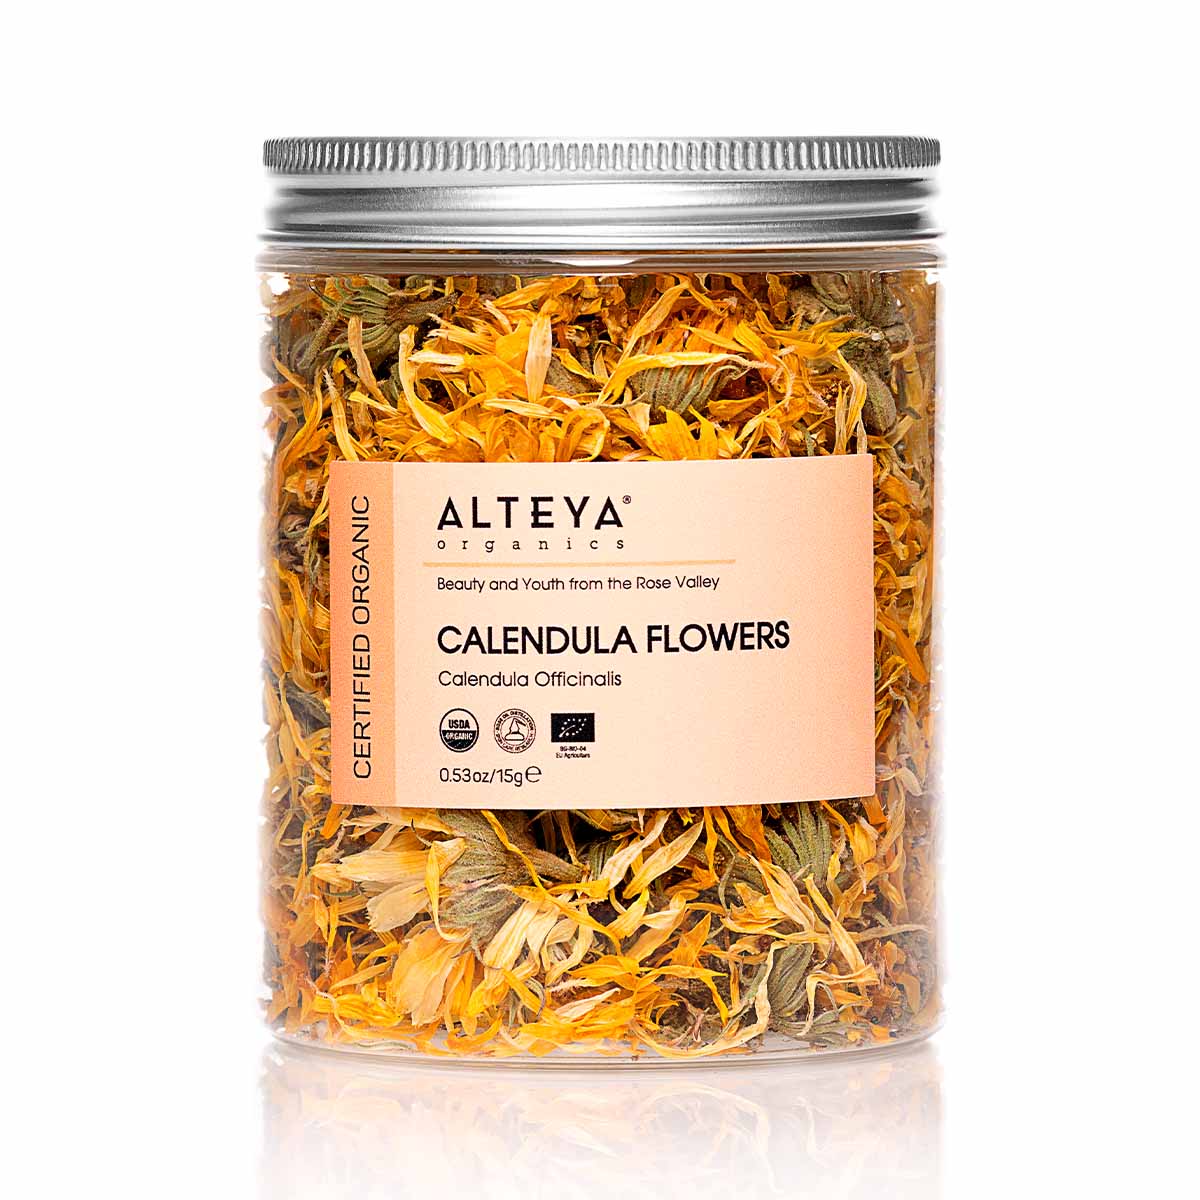 An organic jar of Alteya Organics' Dry Calendula Flowers on a white background exuding wellness vibes.